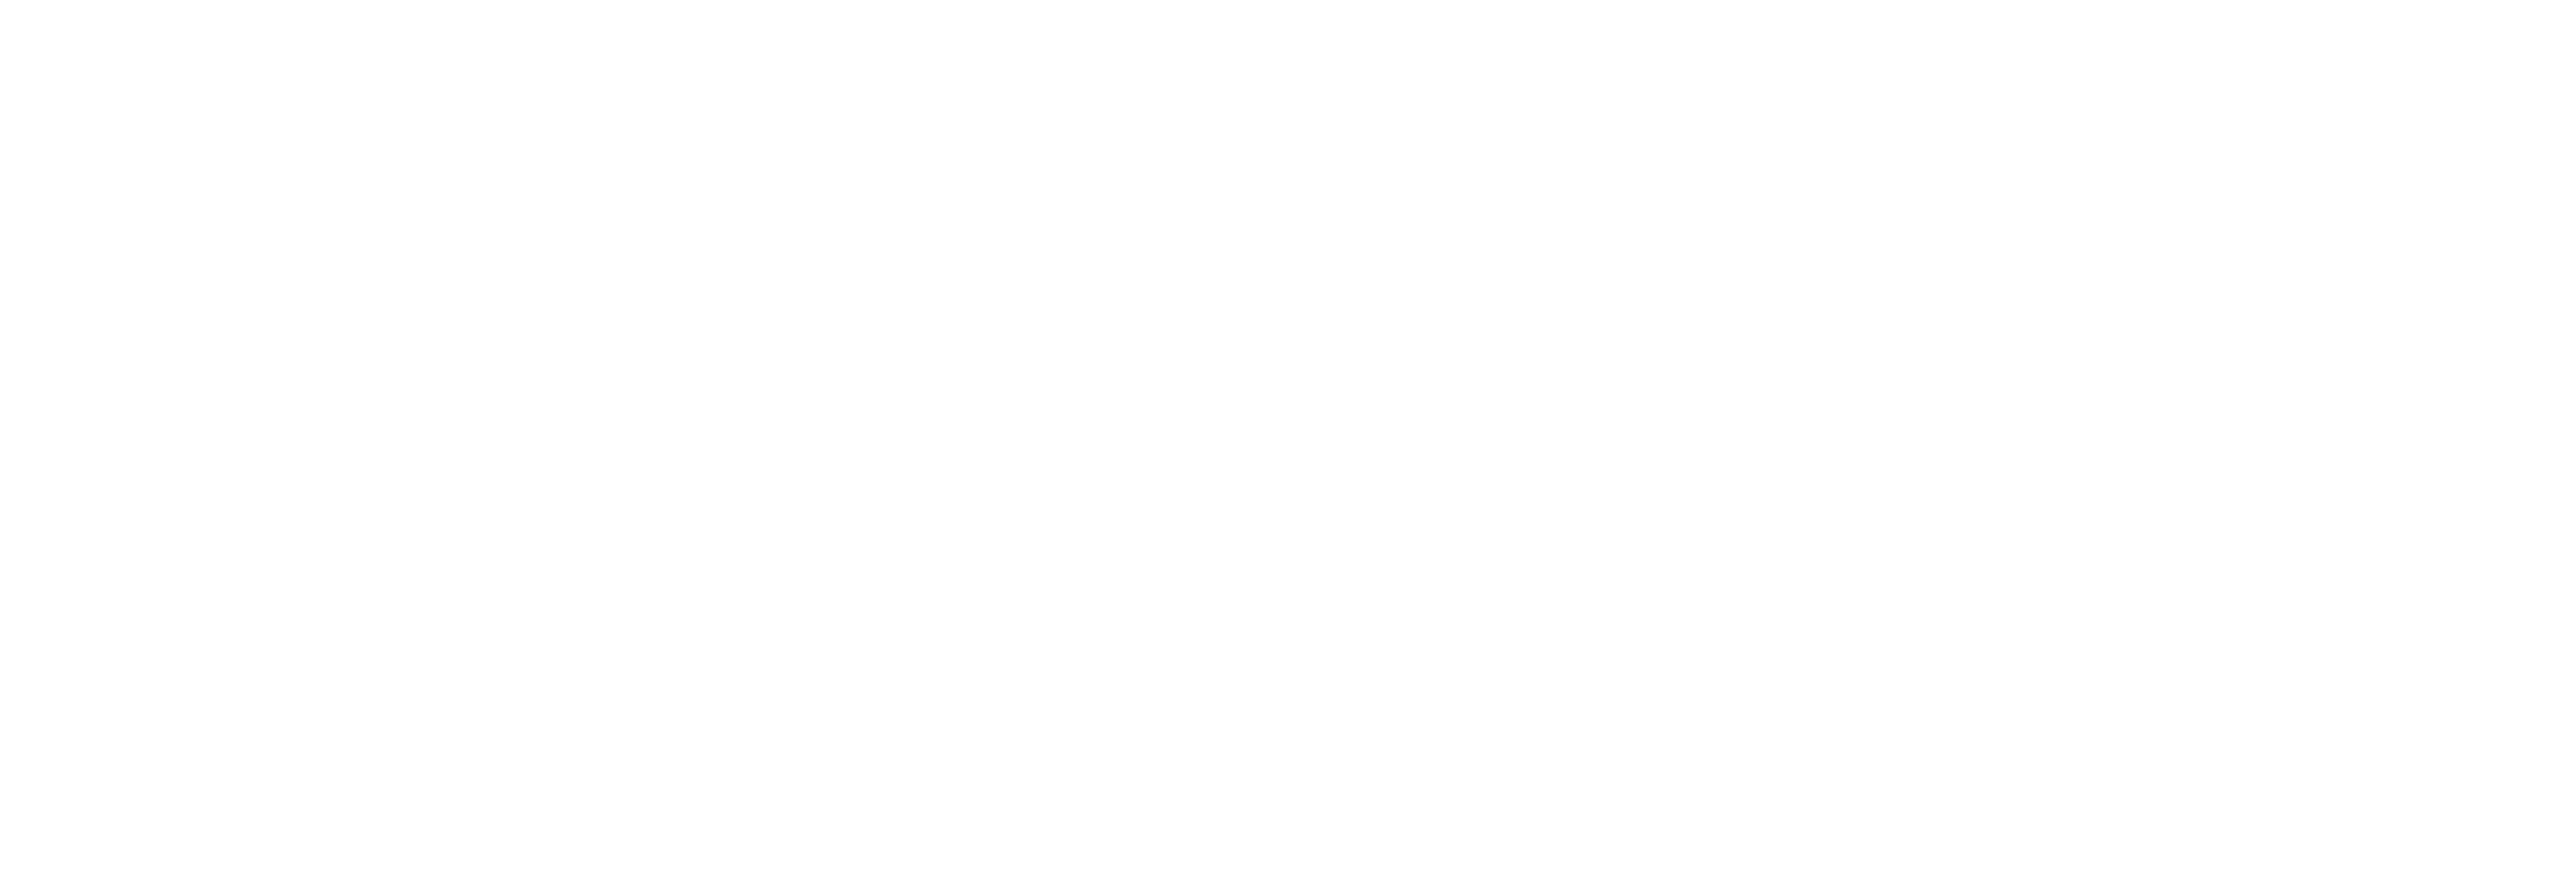 Joseph Wolf Brewing Company